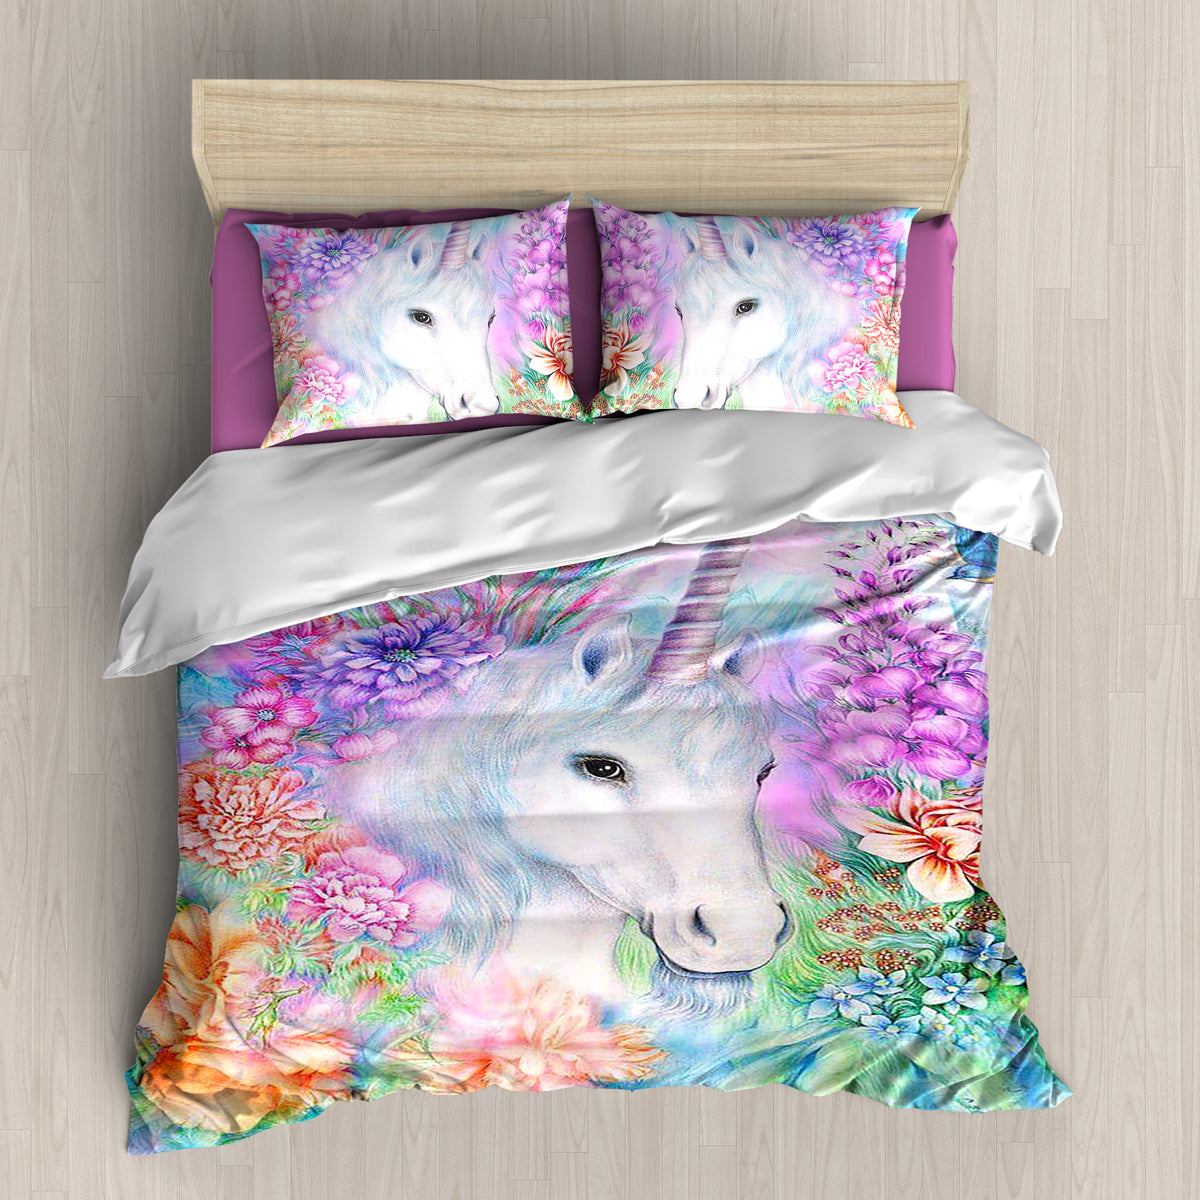  Unicorn  Colorful Bedding  anilopro